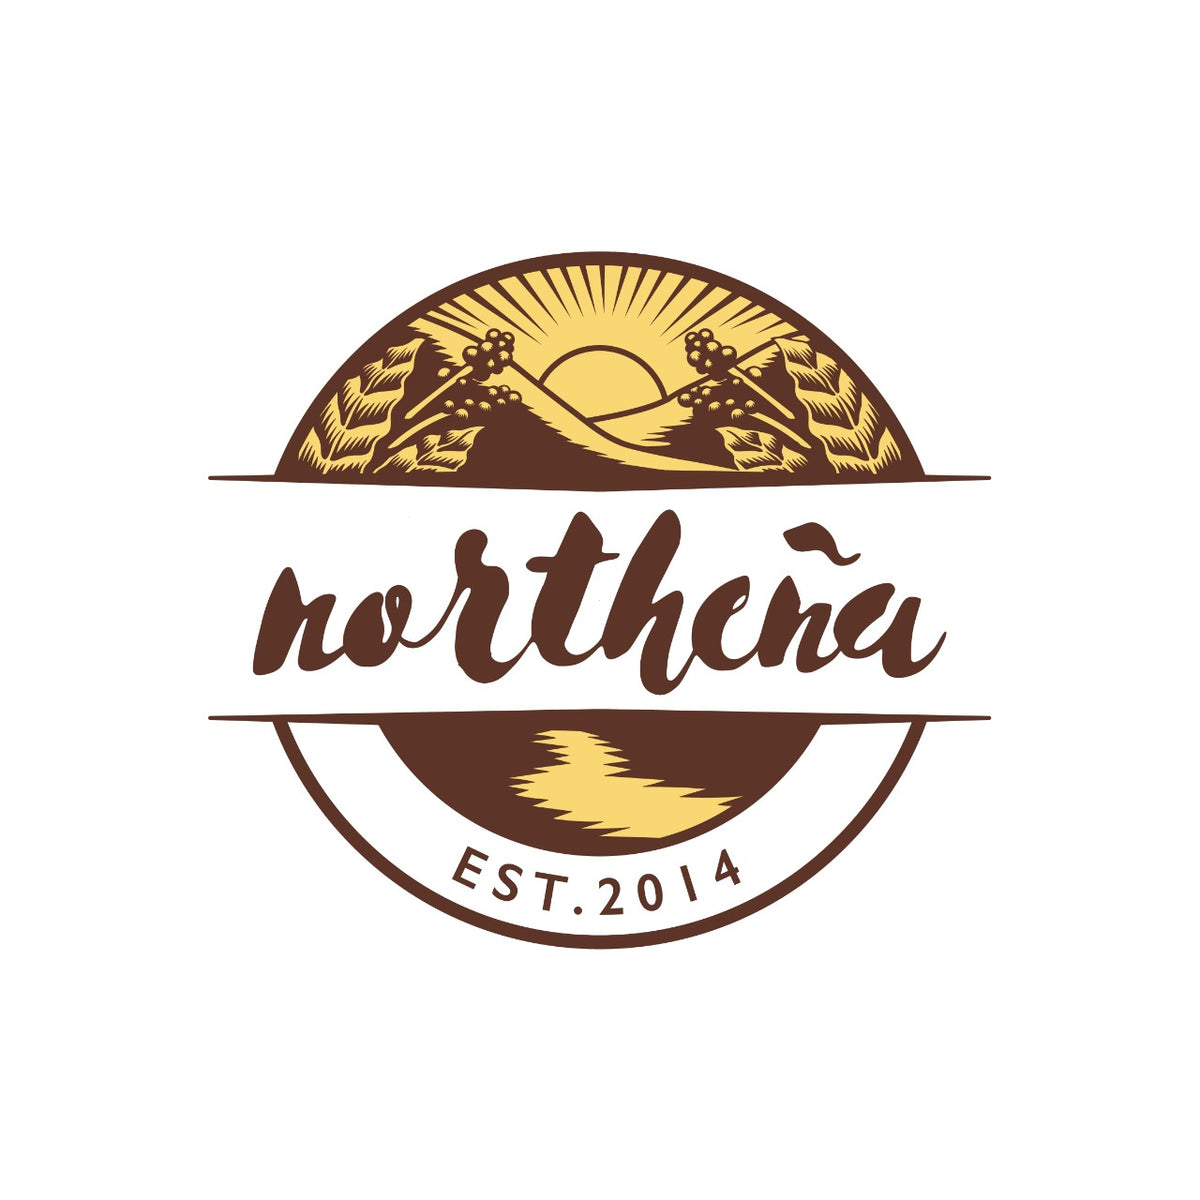 Northeña – Northena